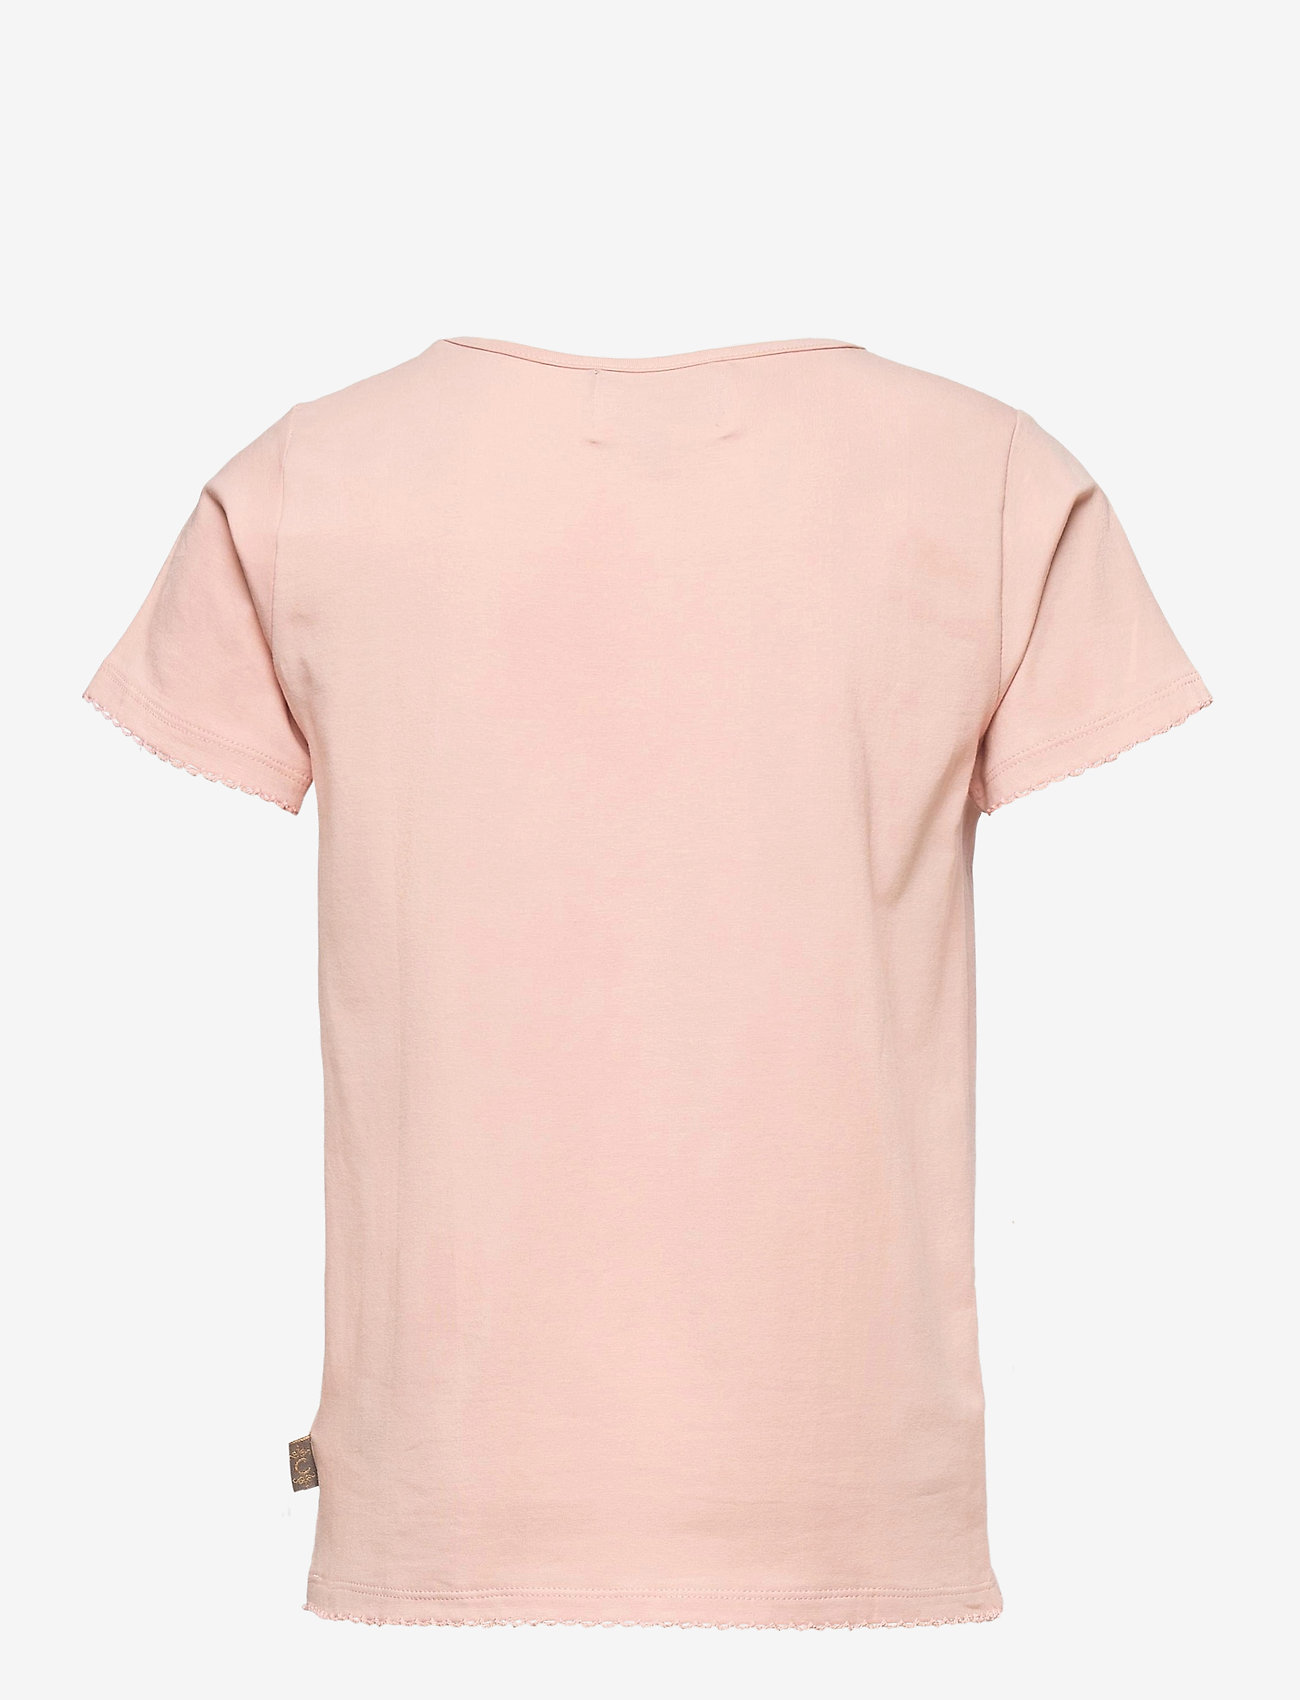 Creamie - Creamie T-shirt SS - kortärmade t-shirts - rose smoke - 1